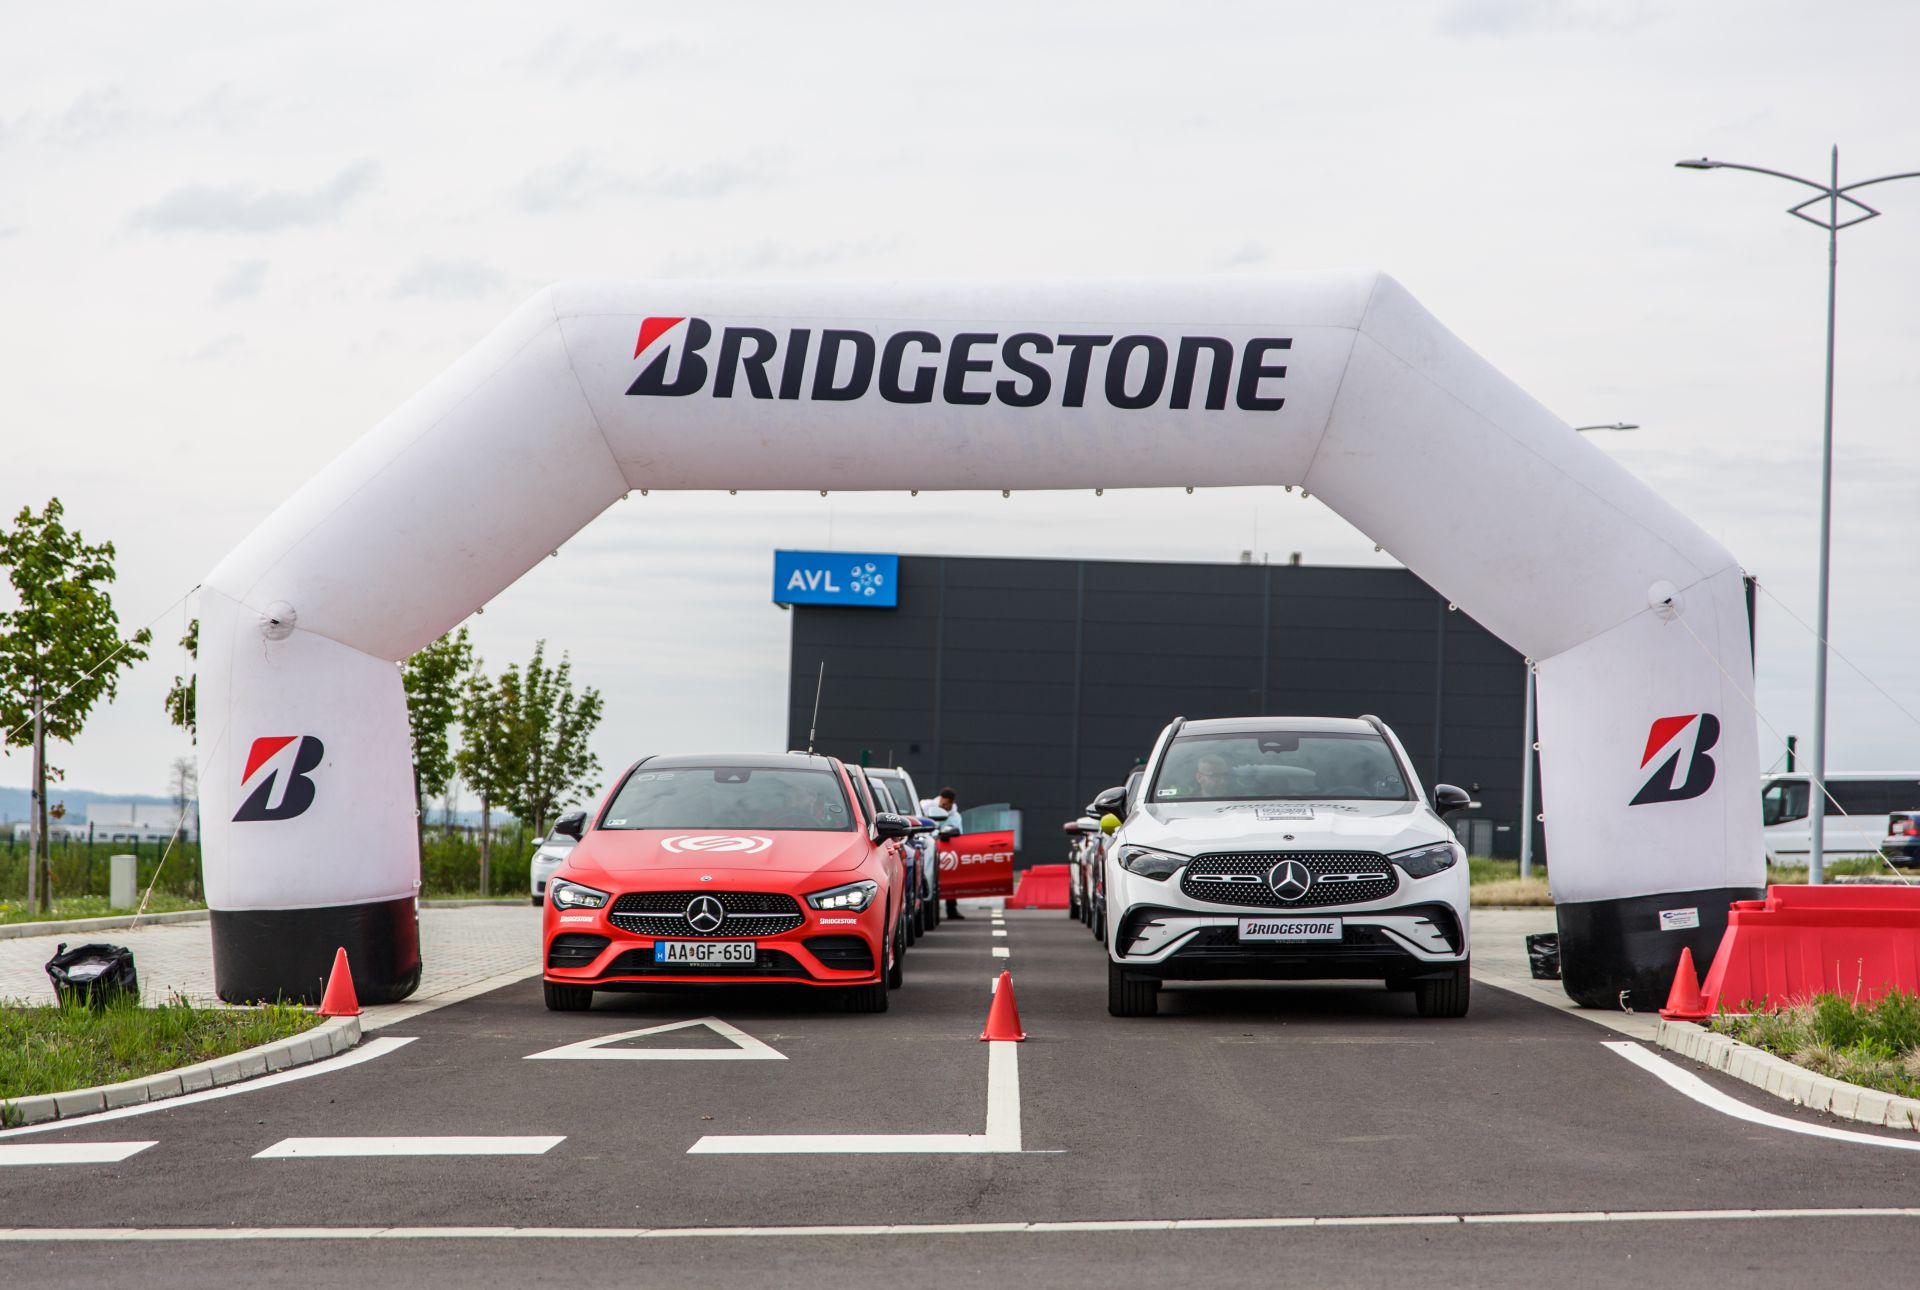 Turanza 6 Tire Presentation - Bridgestone and Speedworld at the Test Track!